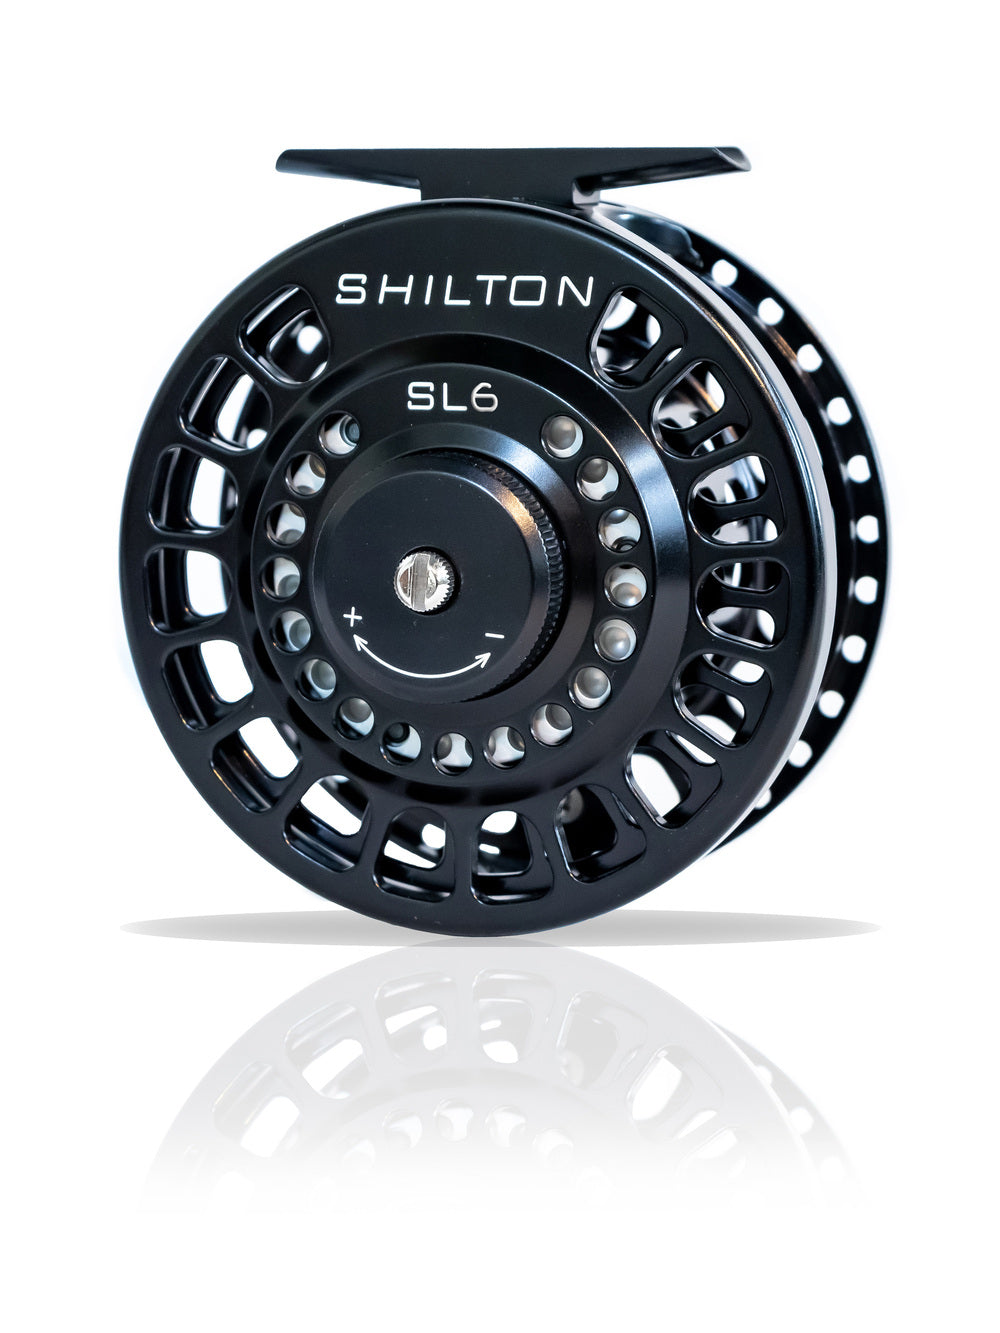 Shilton SL6 Black Reel (9-10wt)